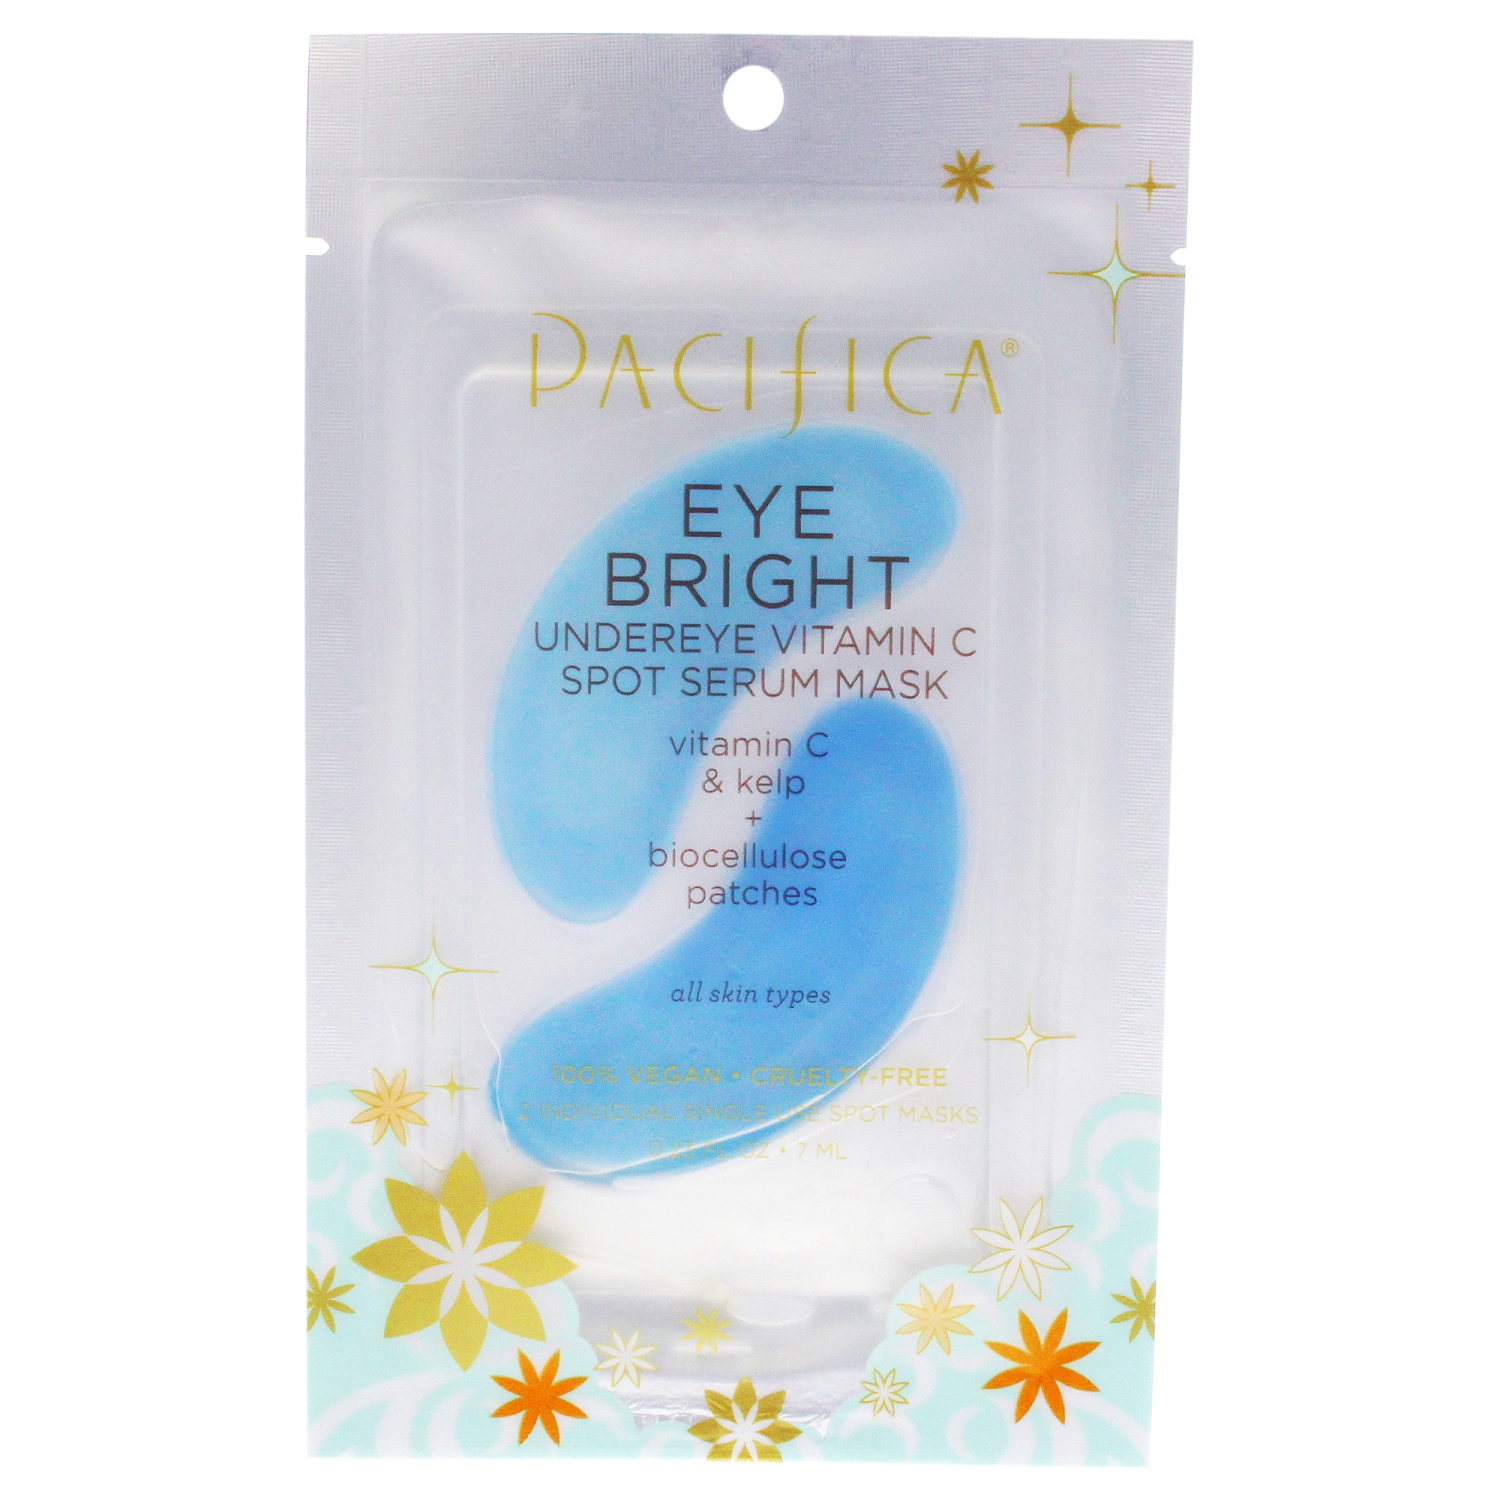 Eye Bright Undereye Vitamin C Spot Serum Mask by Pacifica for Unisex - 0.23 oz Mask